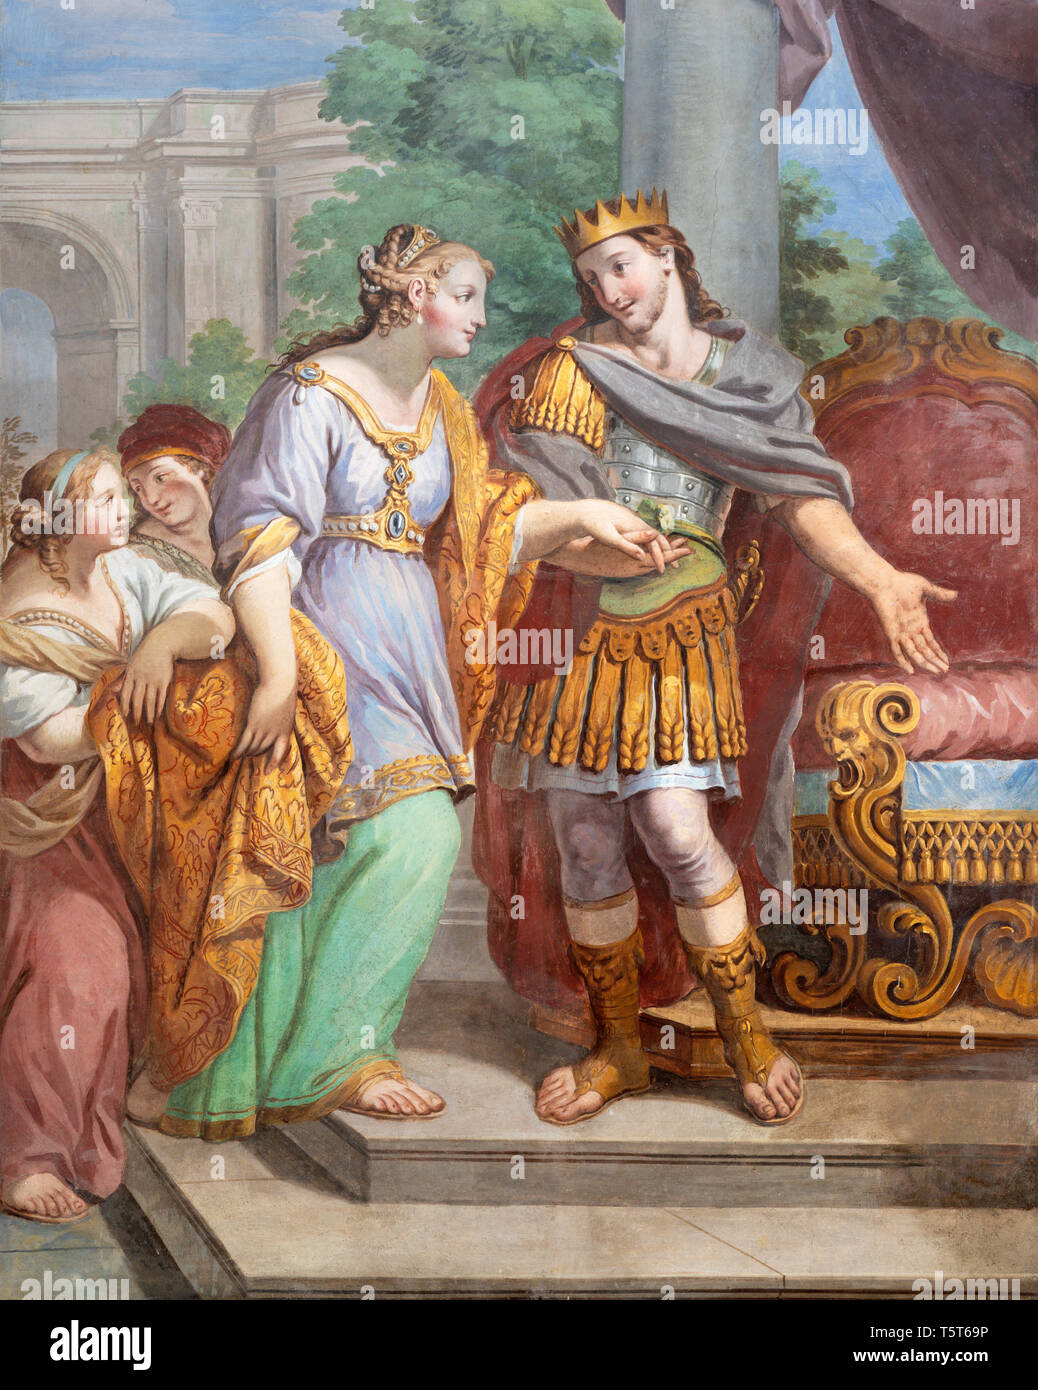 ACIREALE, ITALY - APRIL 11, 2018: The fresco of Esther and king Xerxes in church Chiesa di San Camillo by Pietro Paolo Vasta (1745 - 1750). Stock Photo